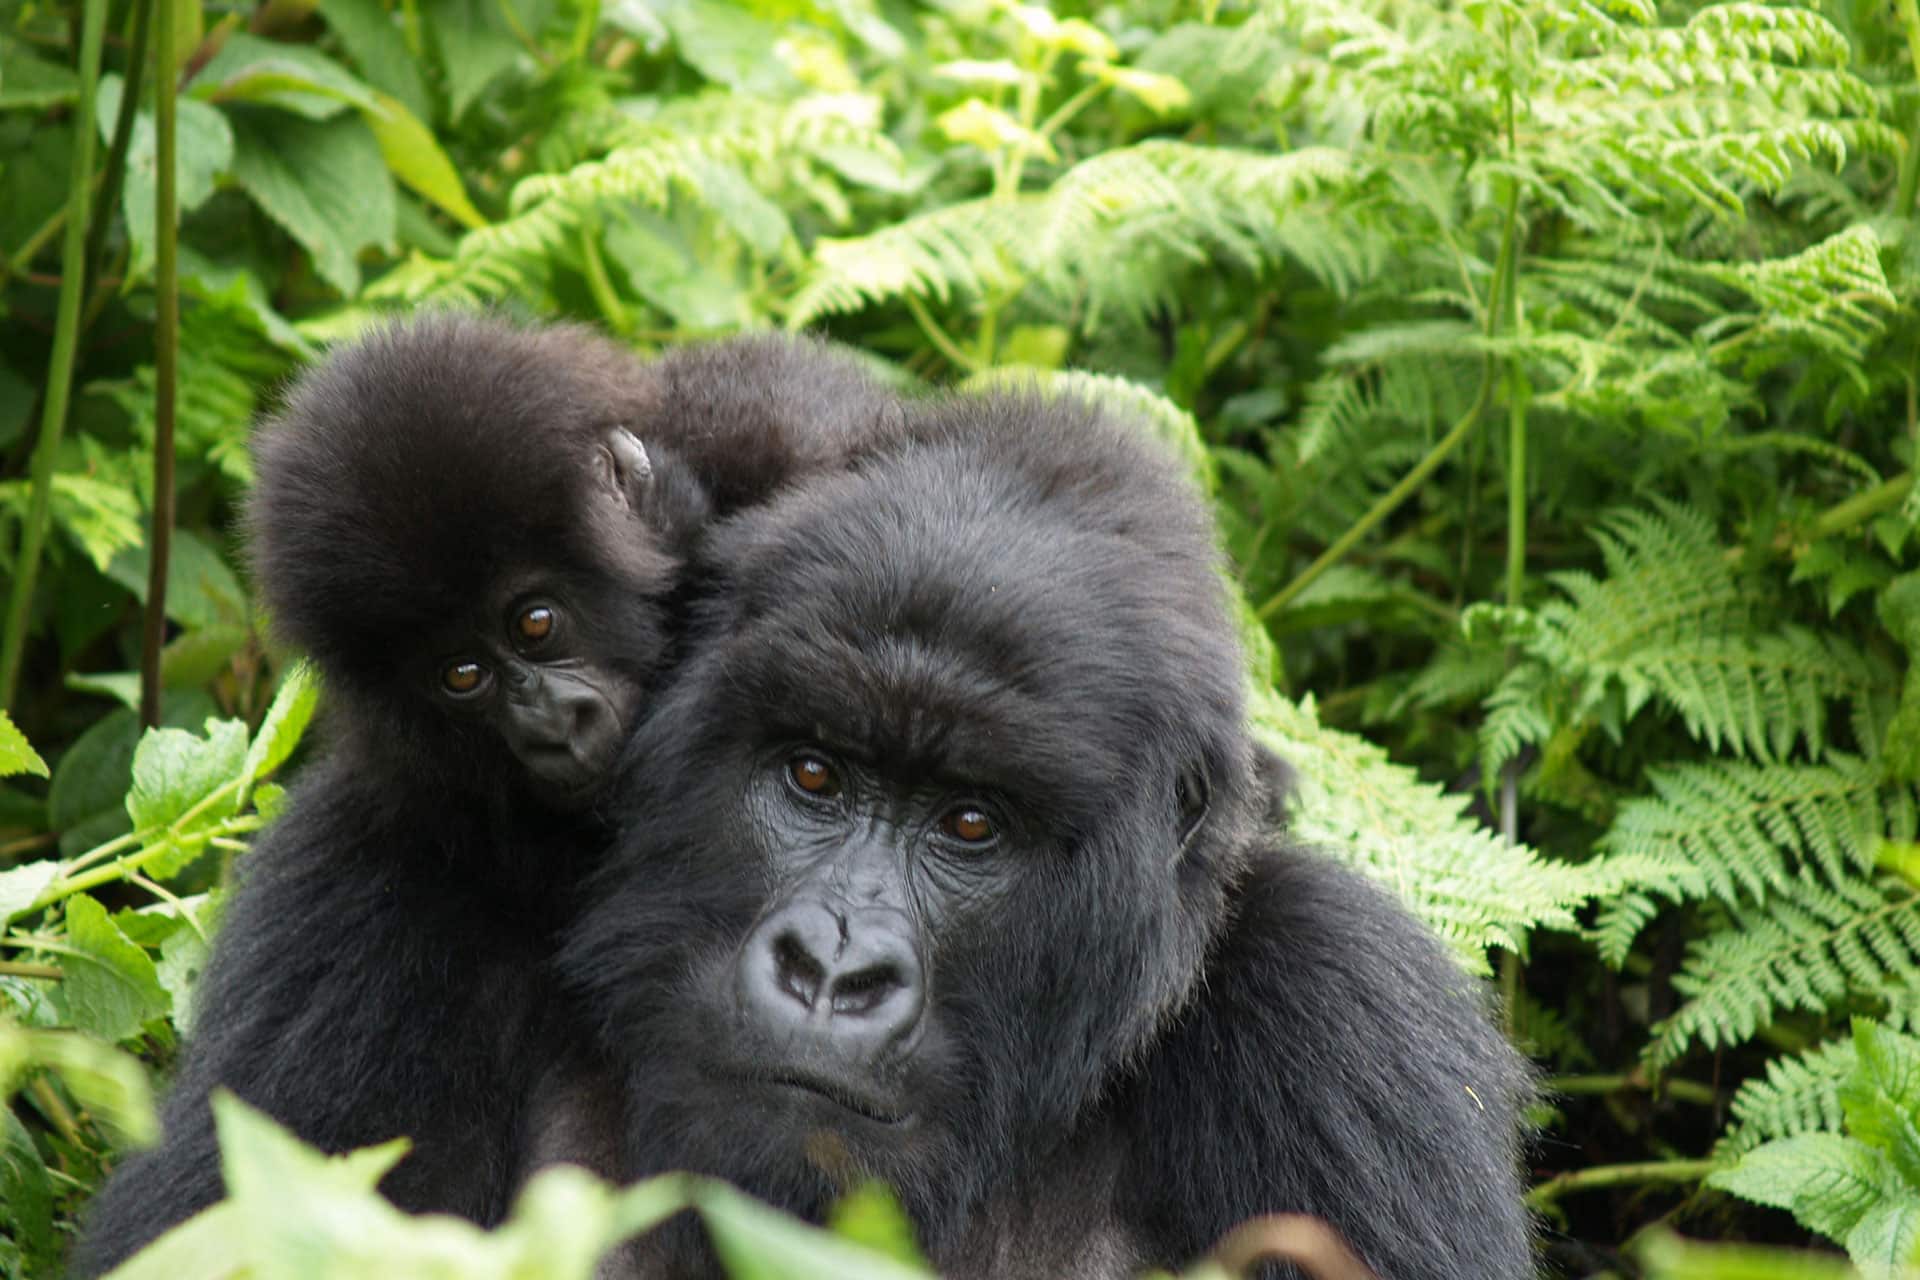 An adult gorilla carrying a baby gorilla from the Kwitonda gorilla family in Rwanda